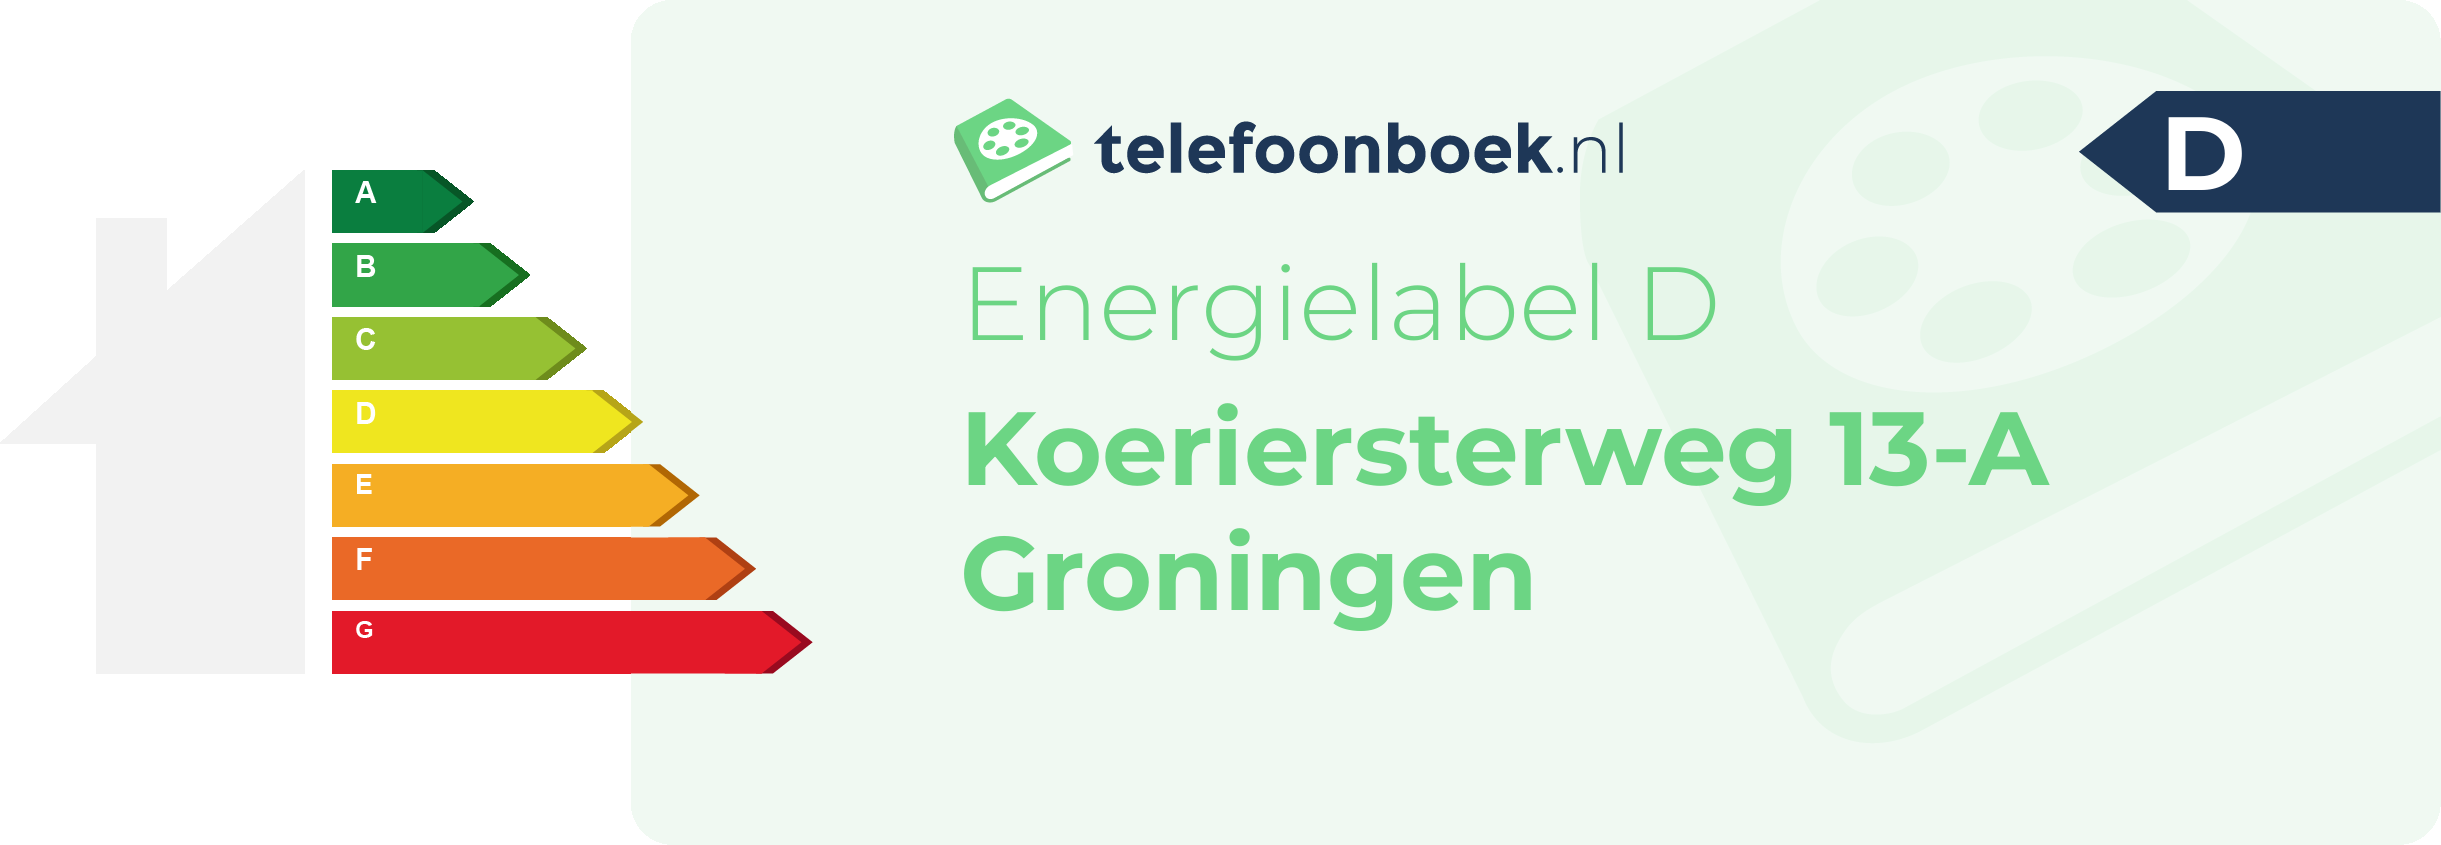 Energielabel Koeriersterweg 13-A Groningen